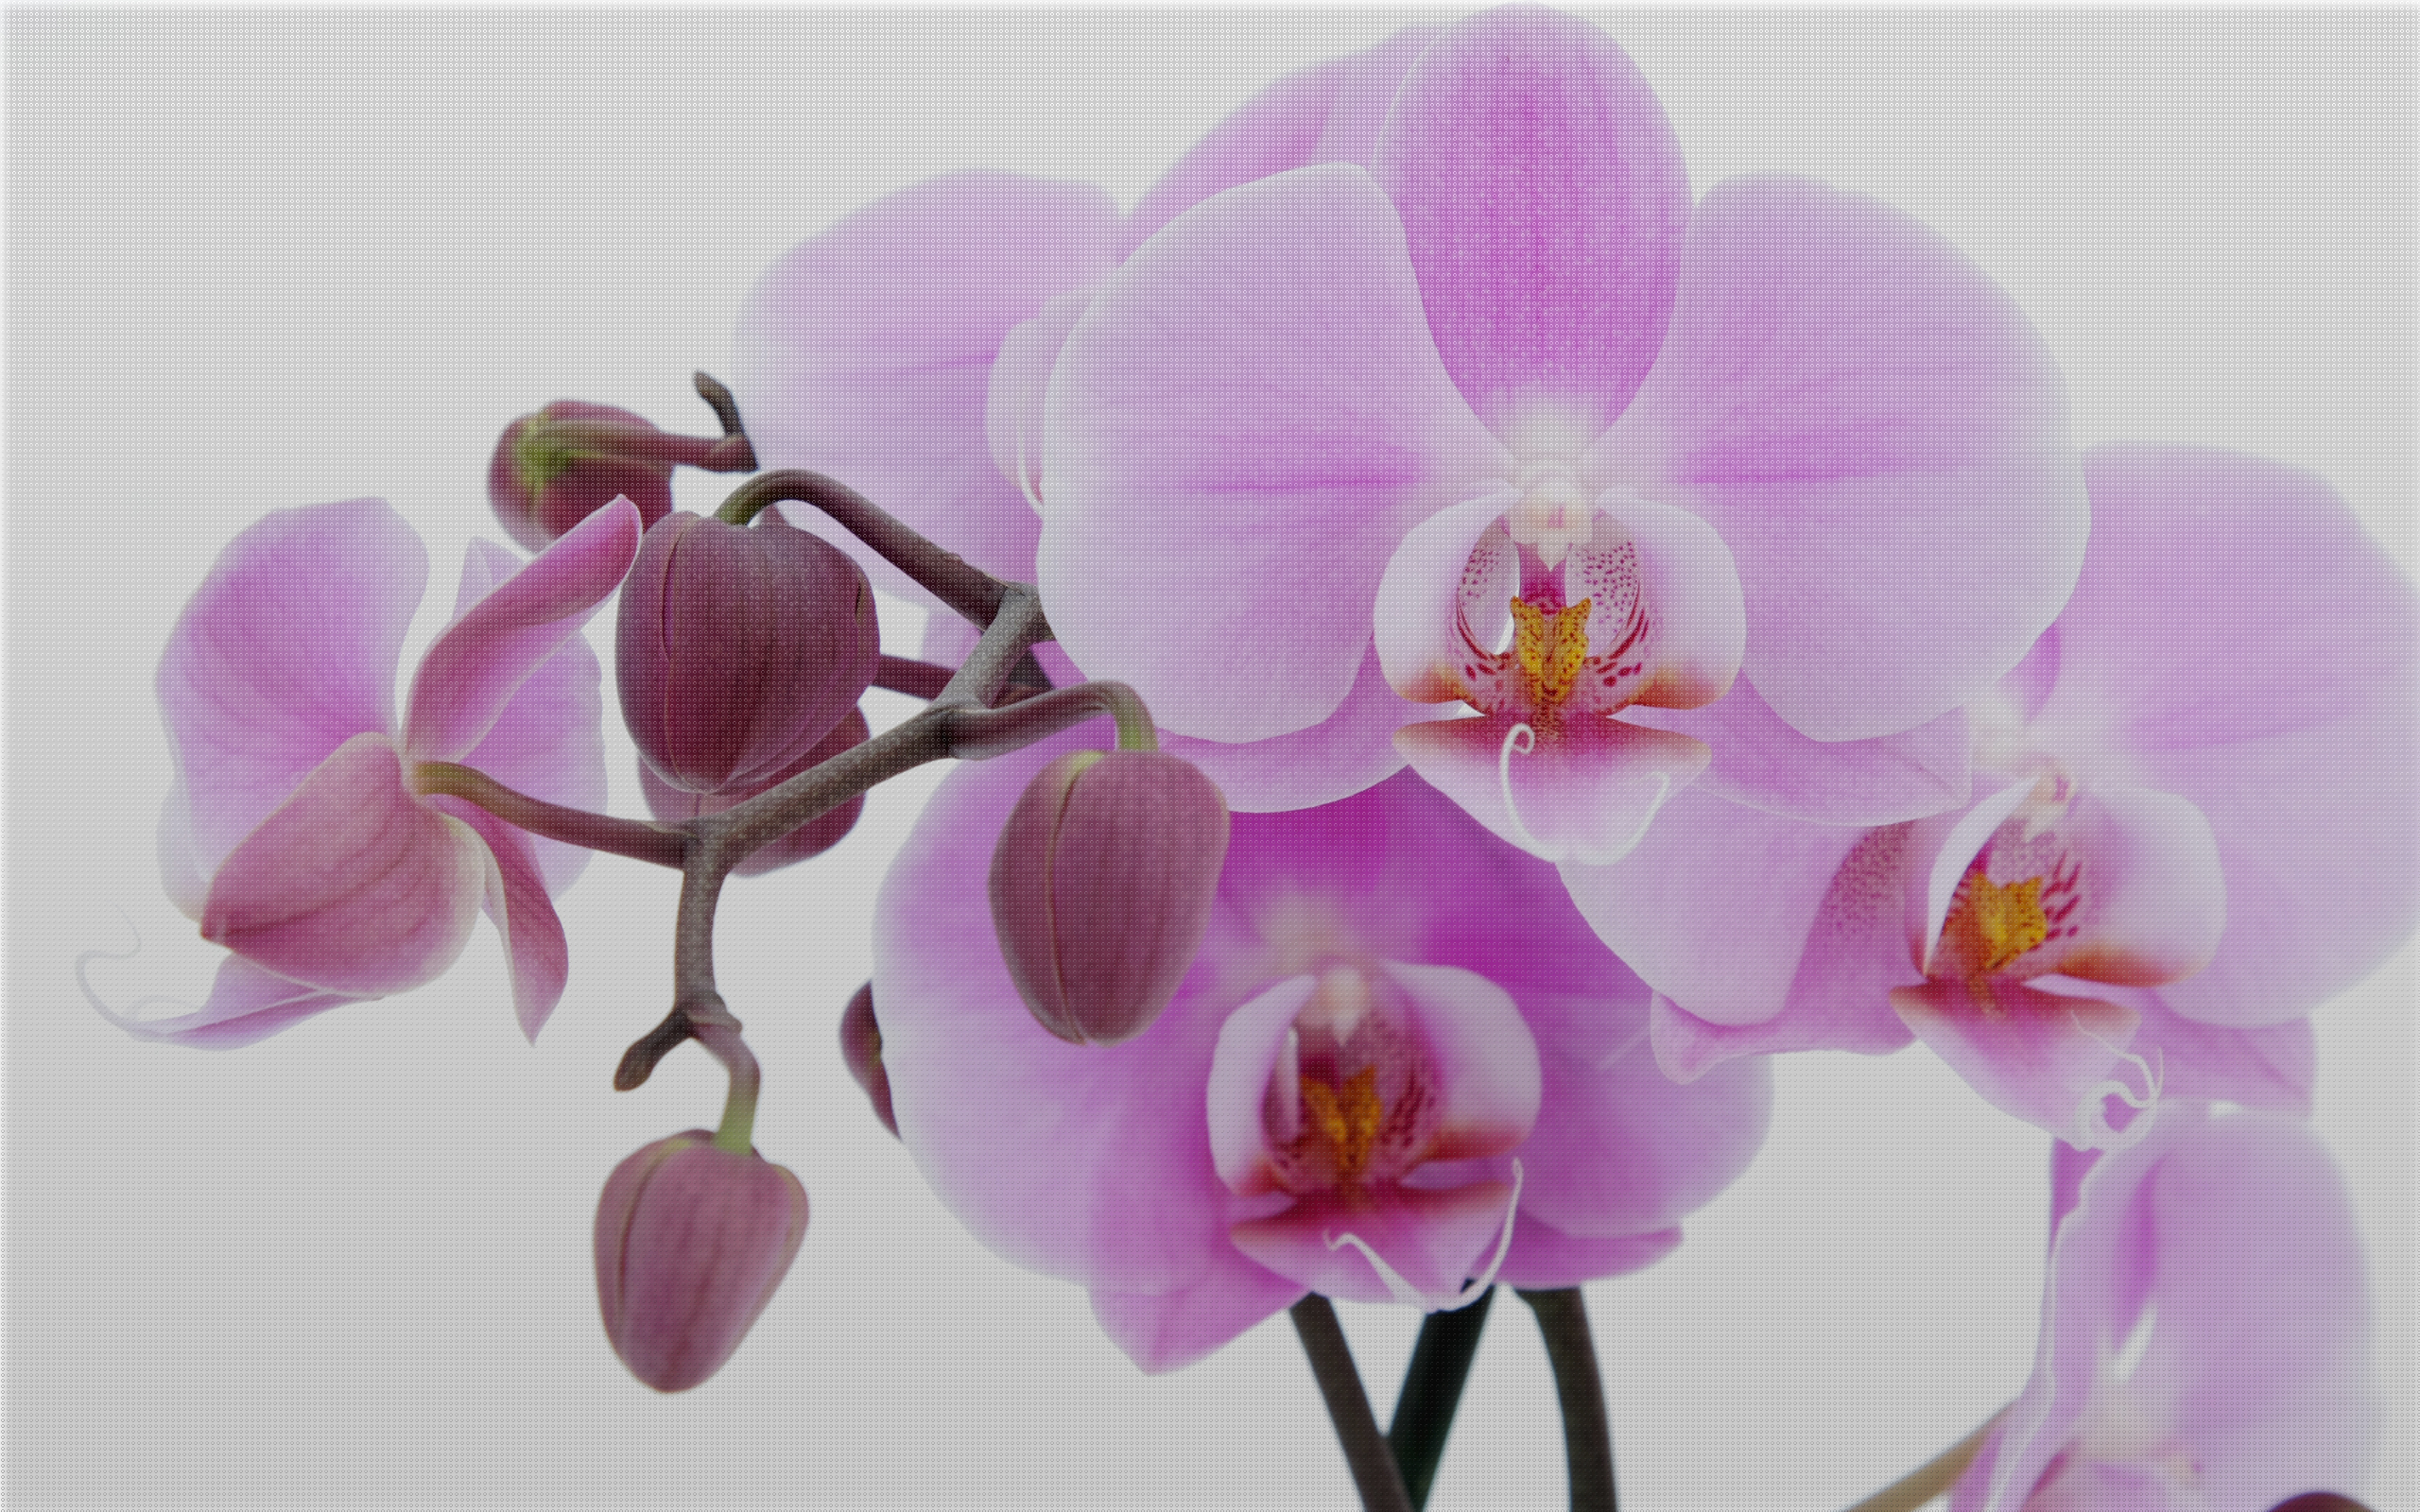 Artistic orchid flower desktop wallpaper.